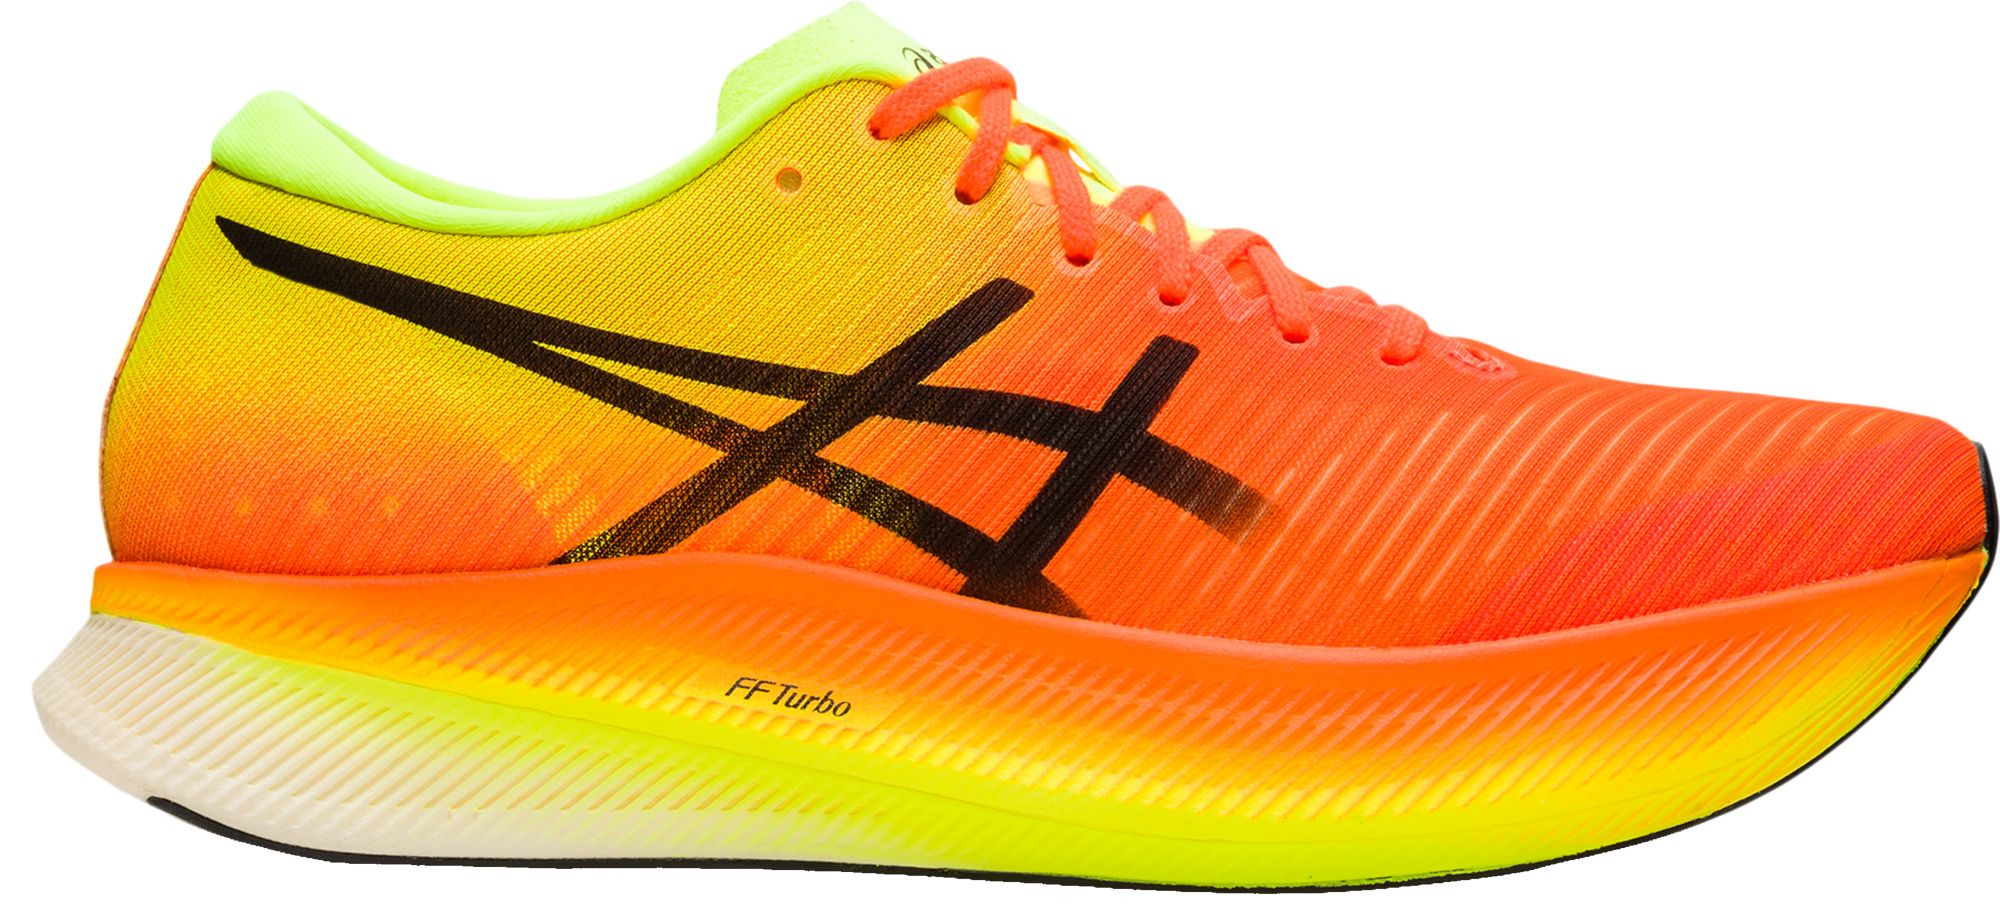 Asics Men’s METASPEED Sky Running Shoes, Size 13, Black/Orange | Black Friday Deal